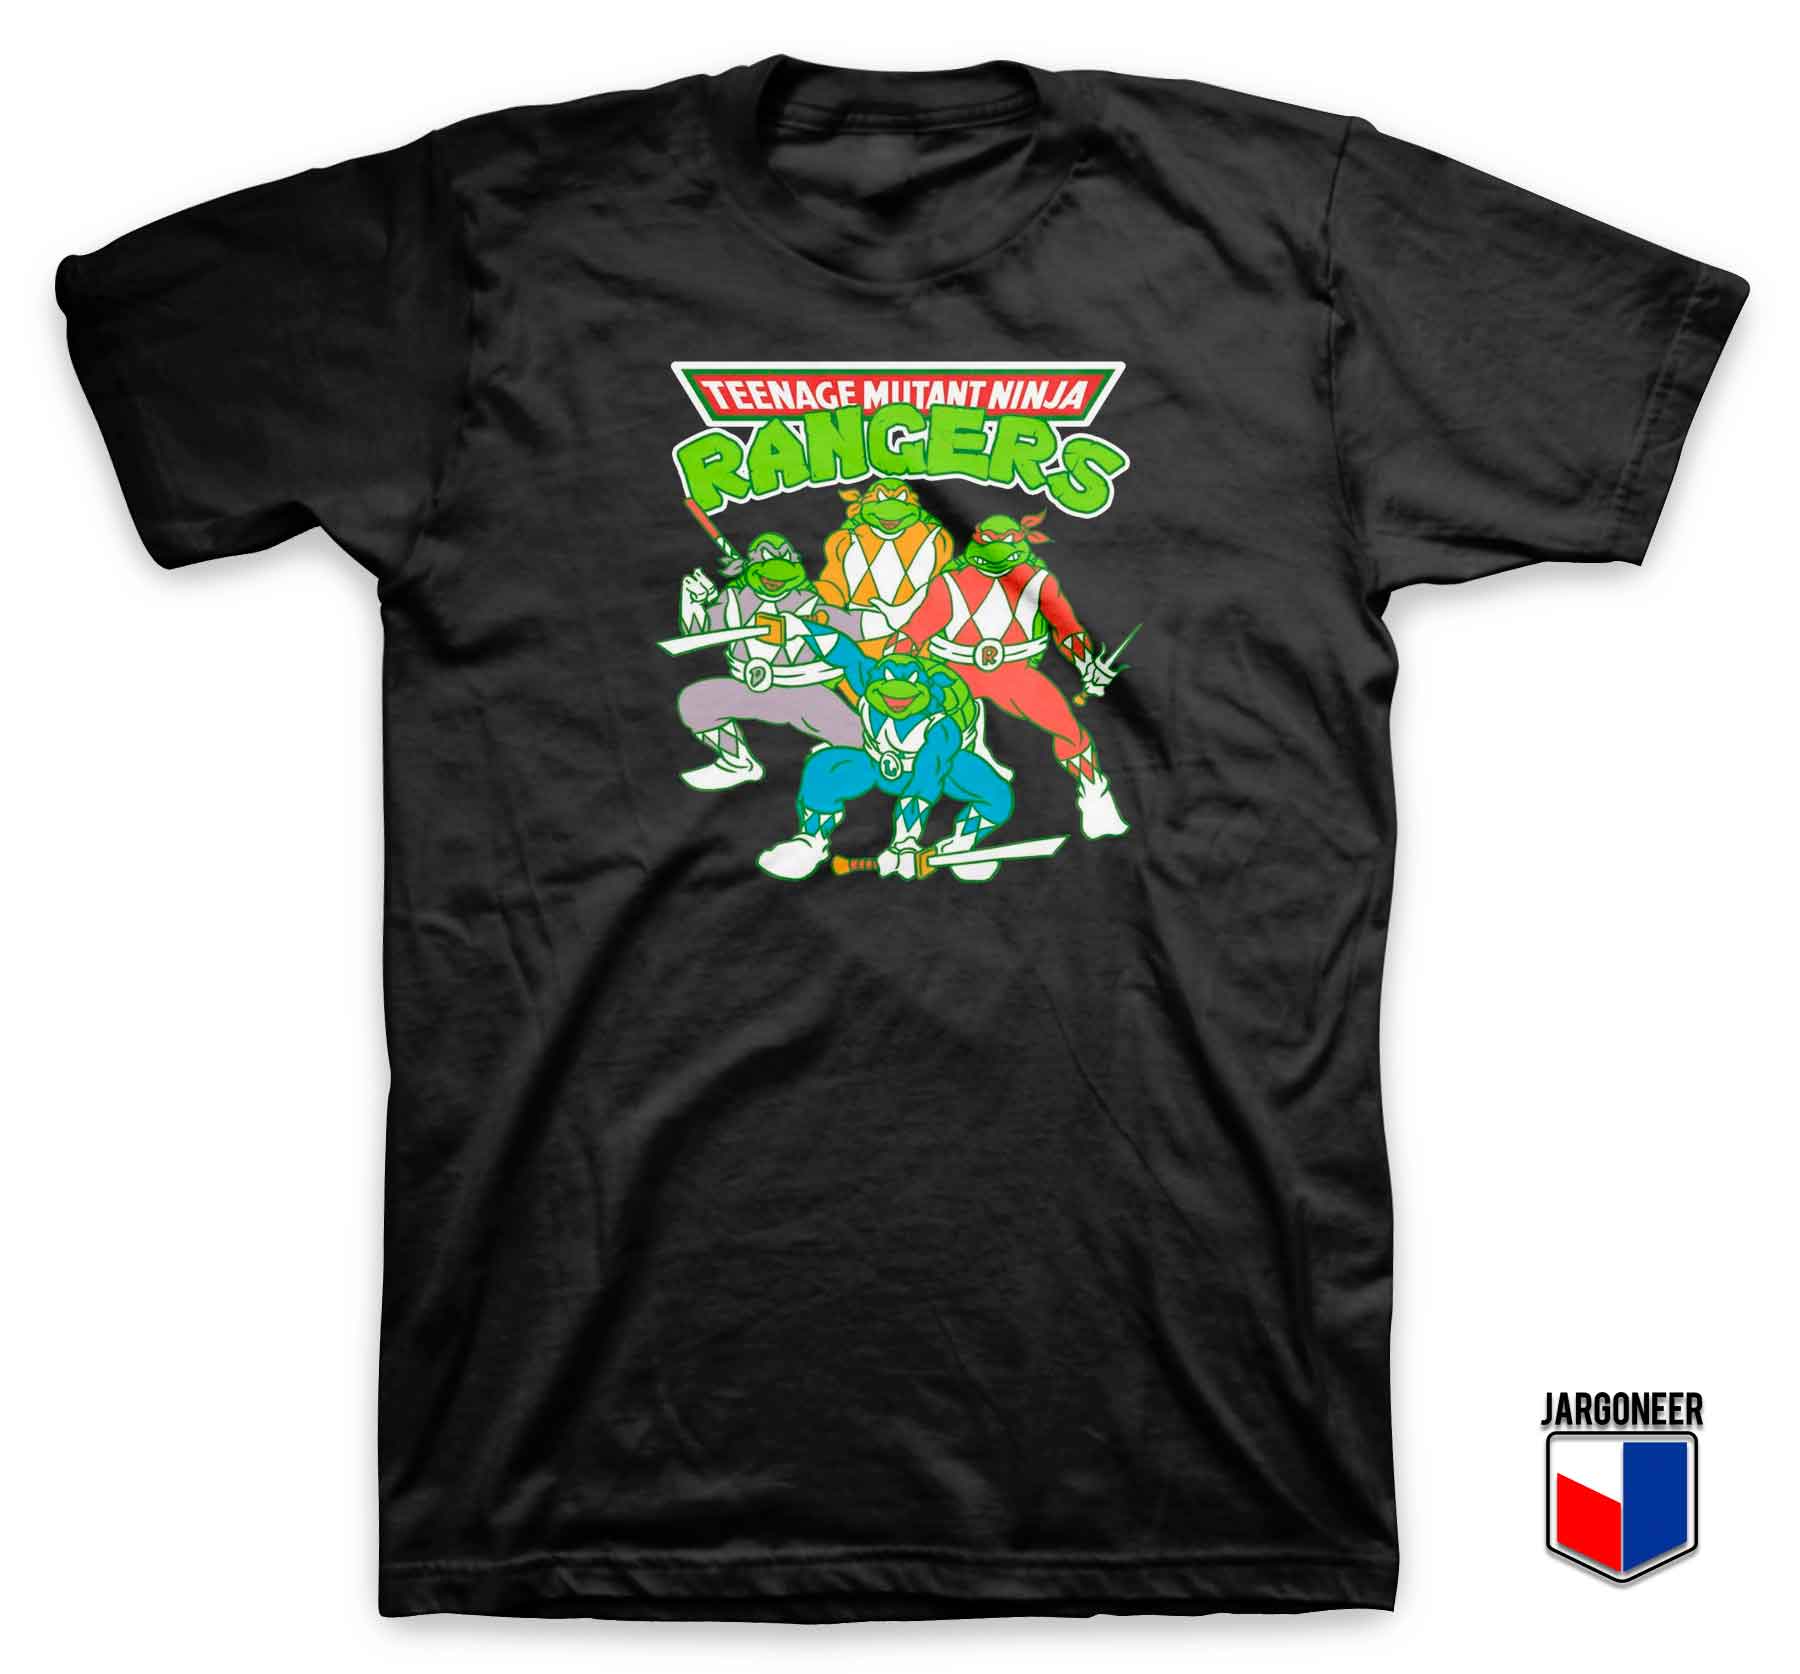 Teenage Mutant Ninja Rangers T Shirt - Shop Unique Graphic Cool Shirt Designs